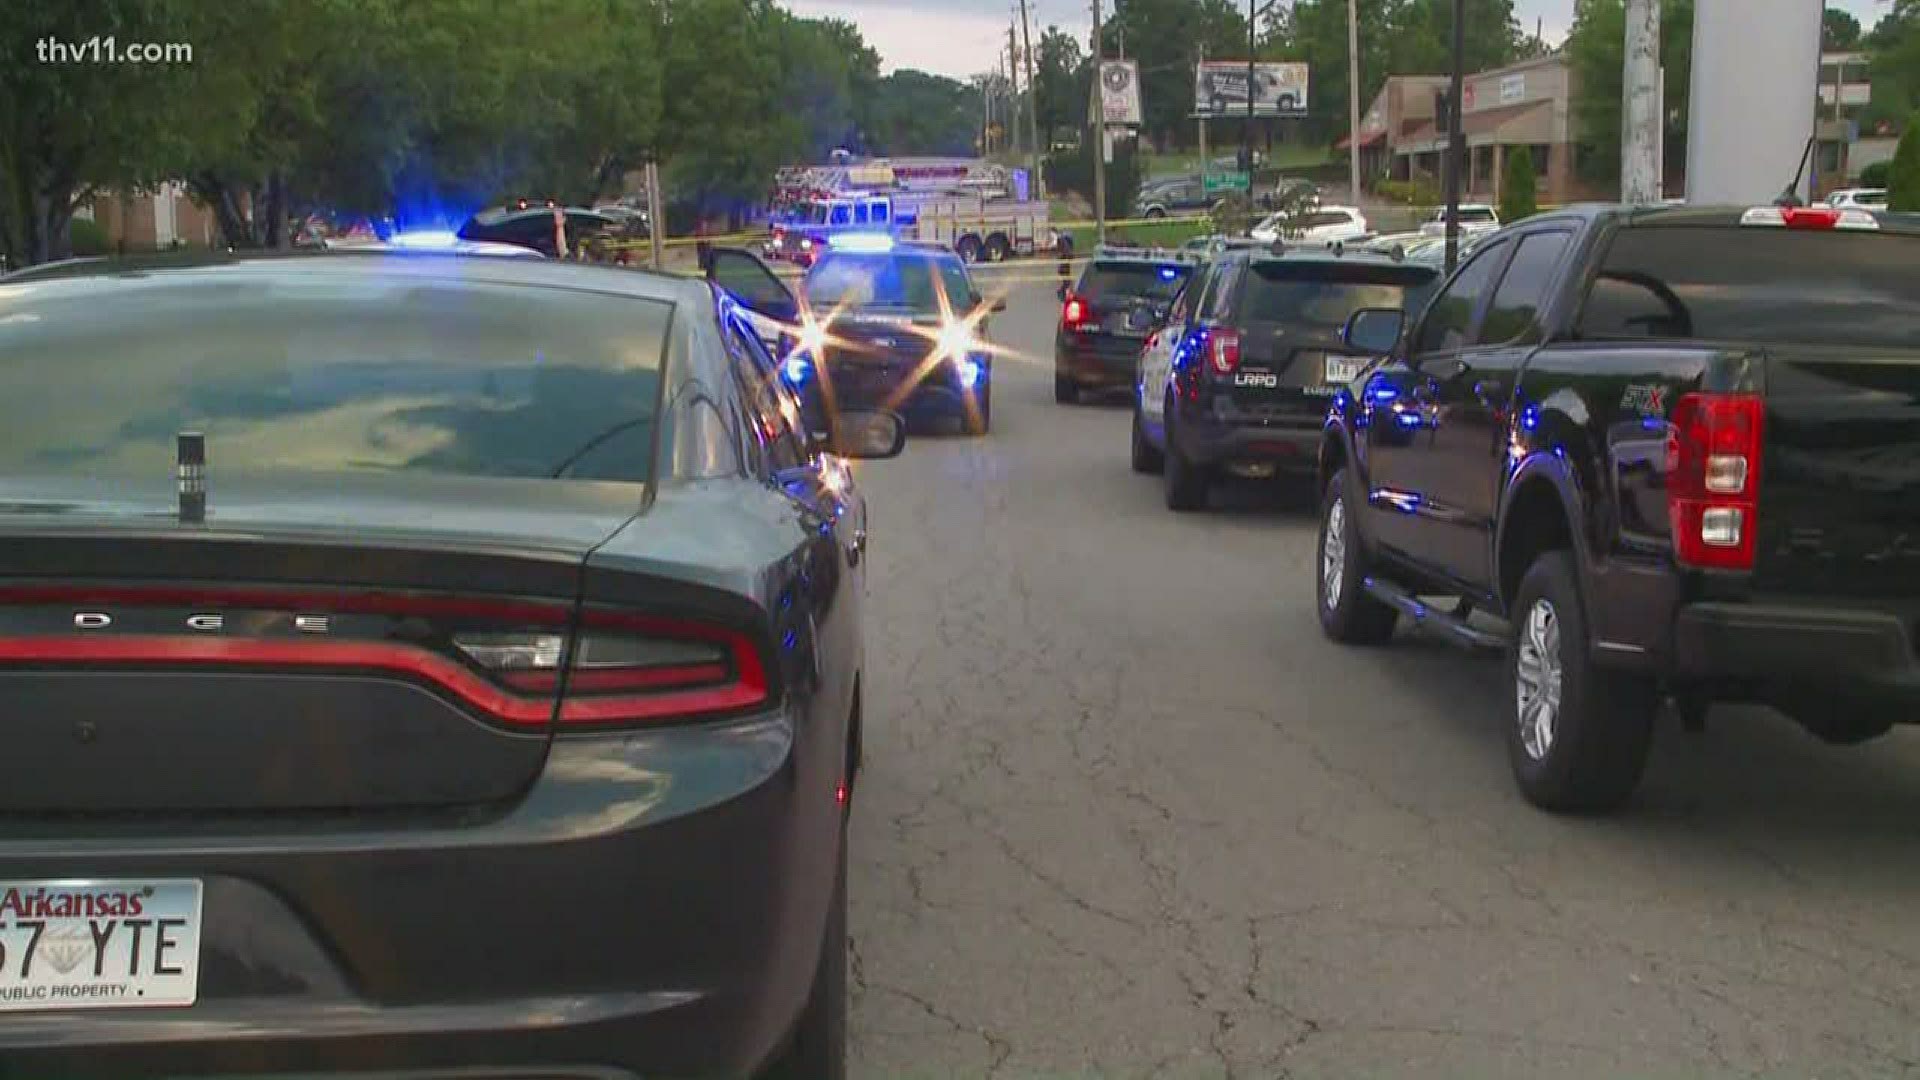 Little Rock police investigate shooting on N. Shackleford